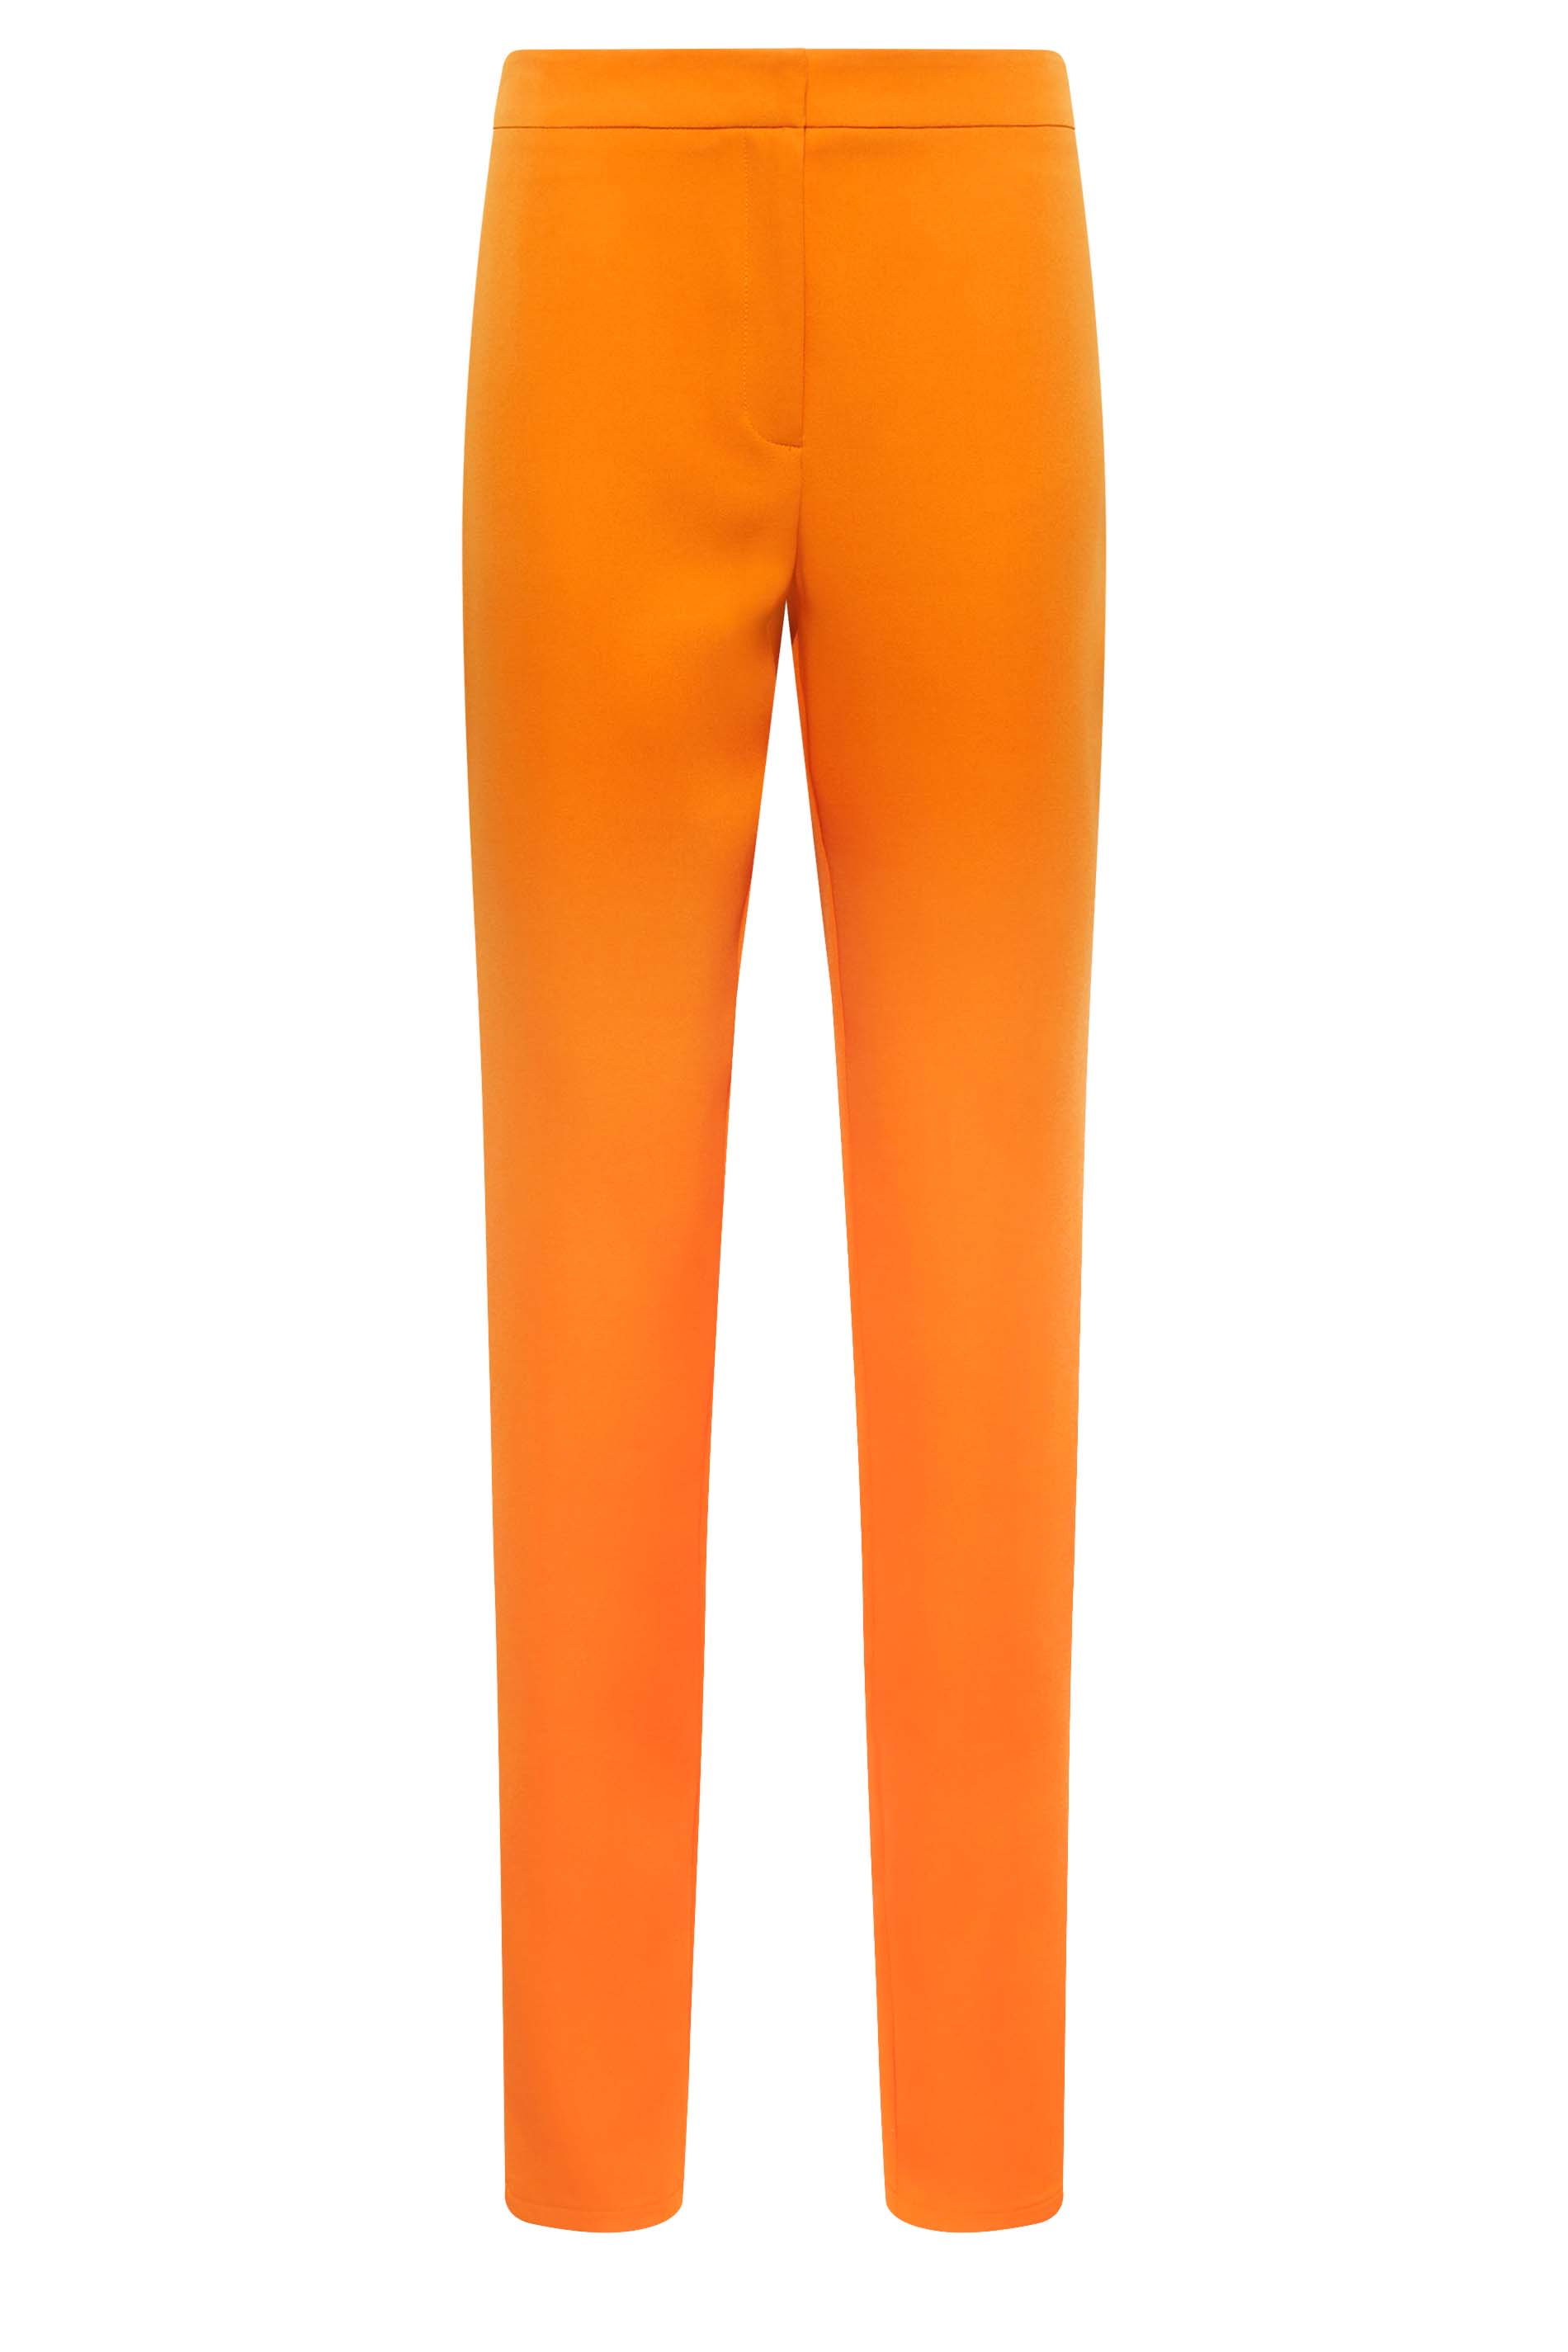 LTS Tall Women's Orange Slim Leg Trousers | Long Tall Sally 2